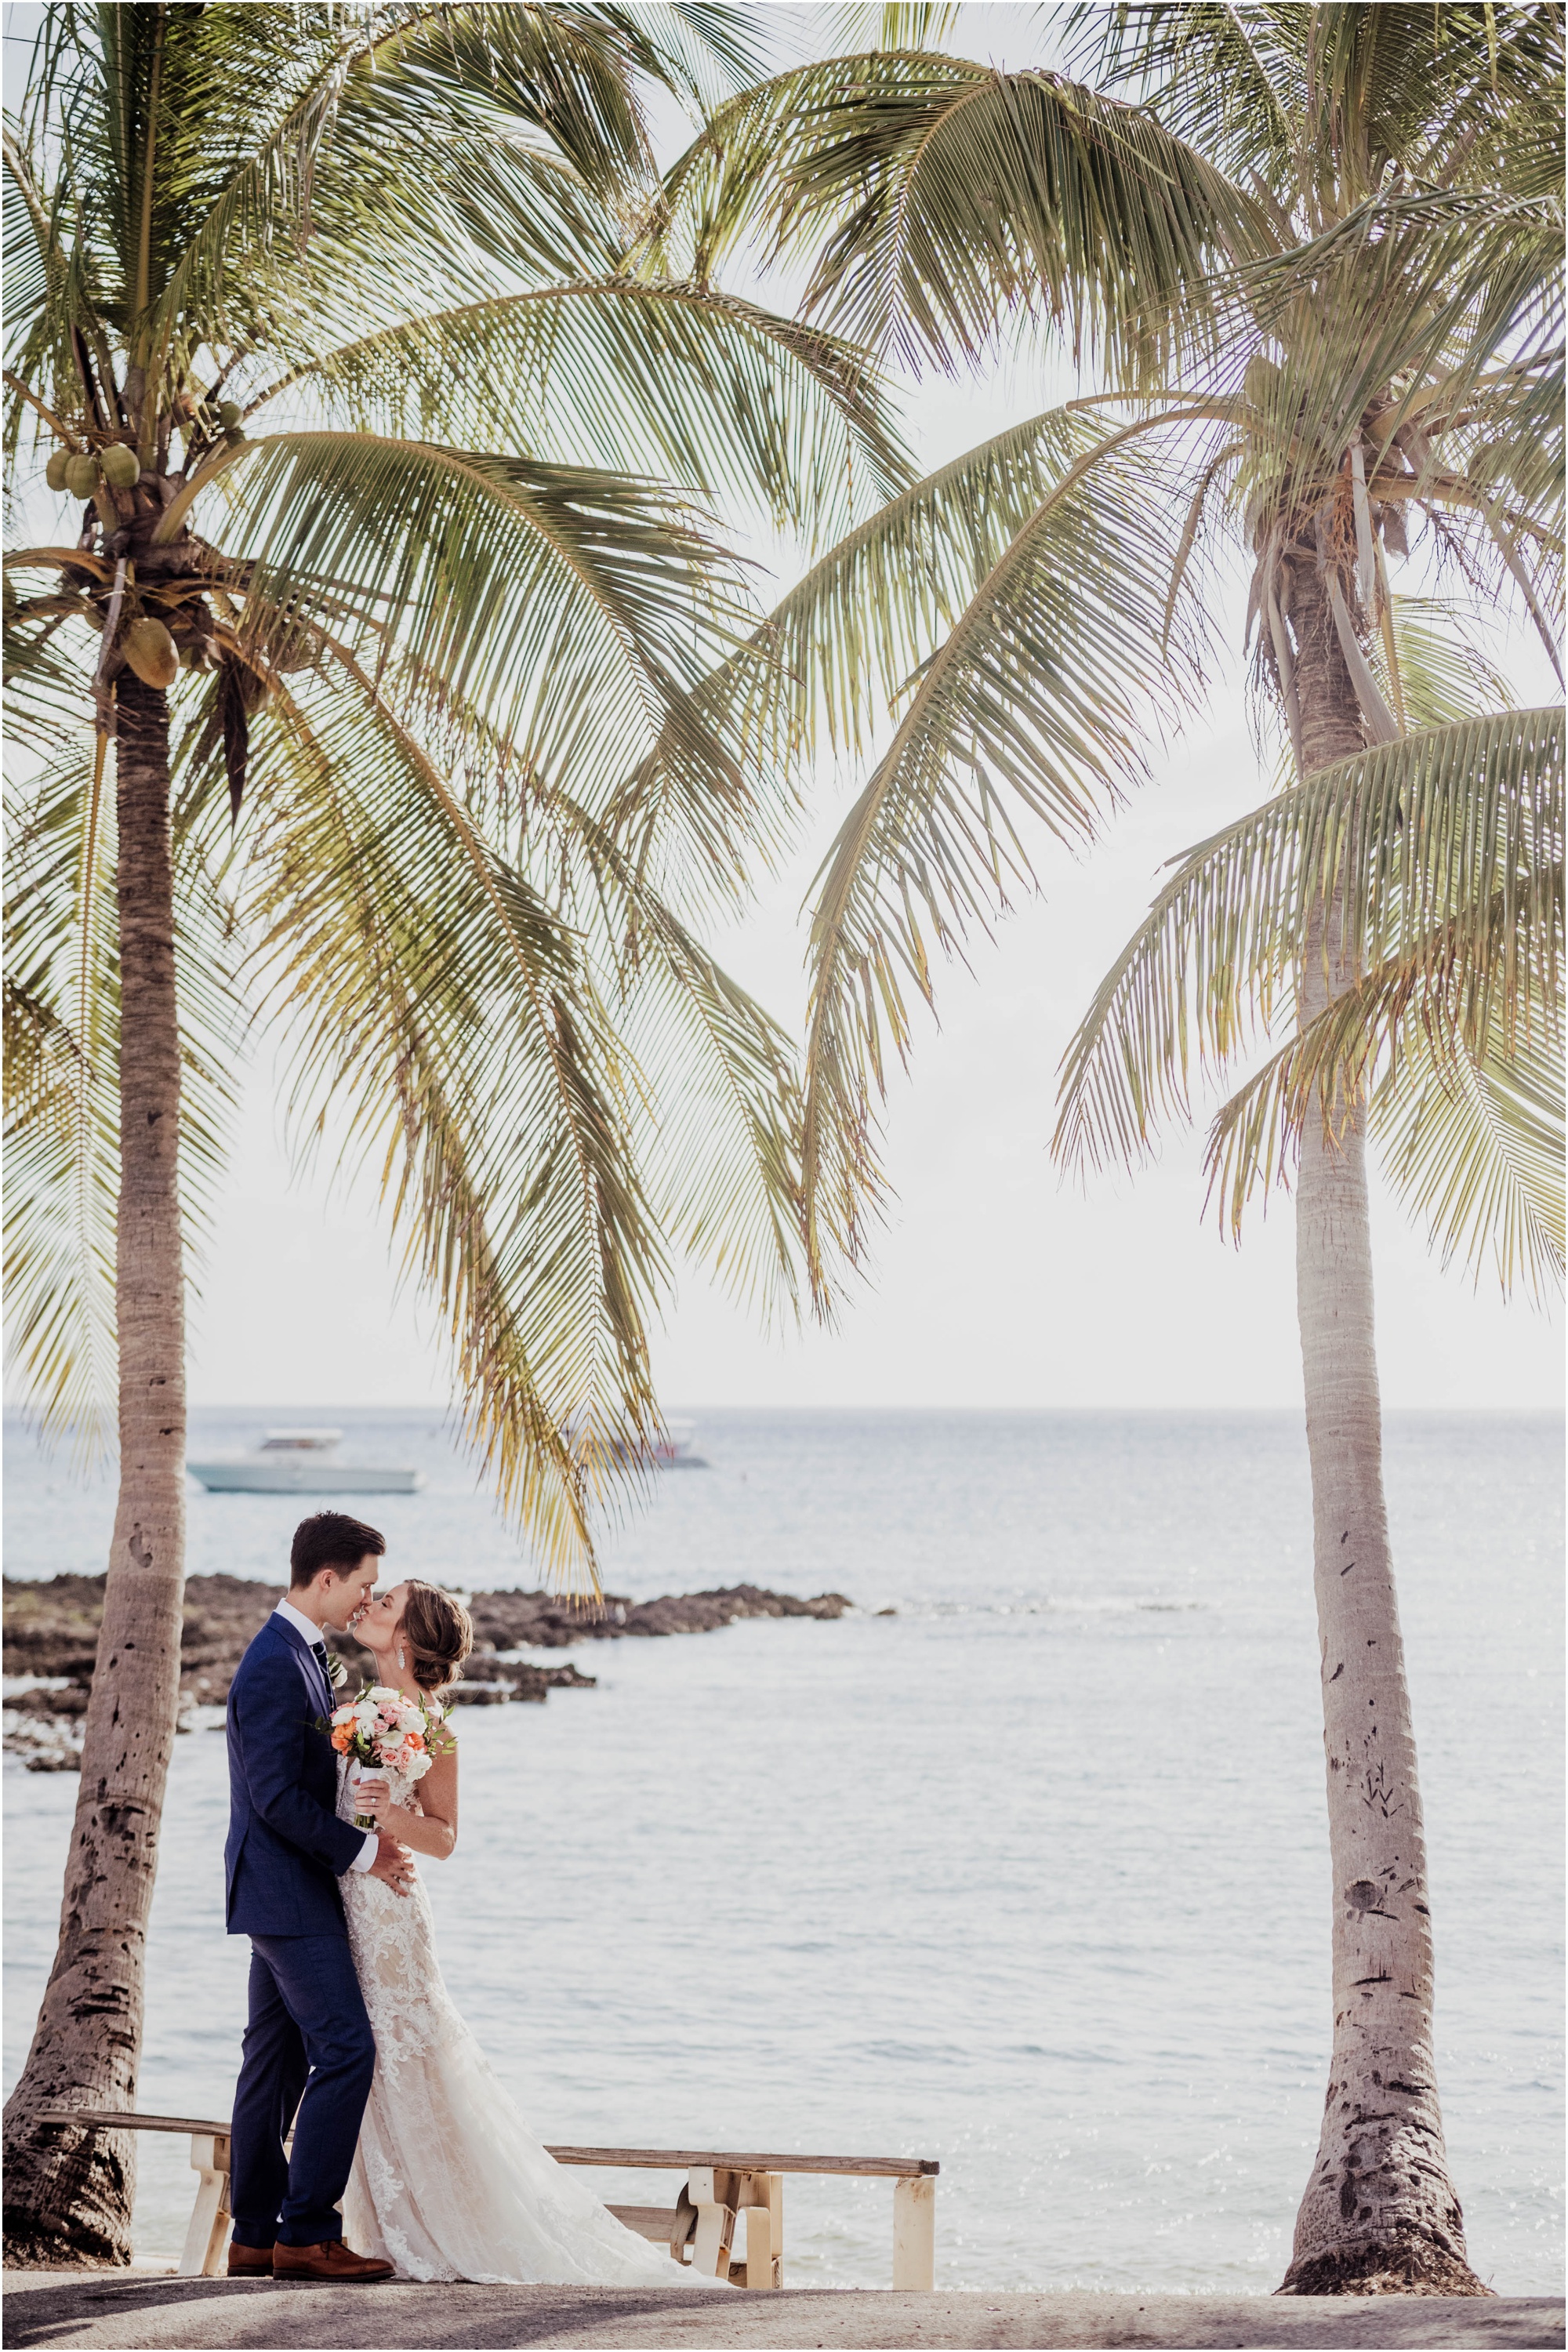 bride and groom in cayman islands, groom in navy blue suit, bride in essence of austria gown